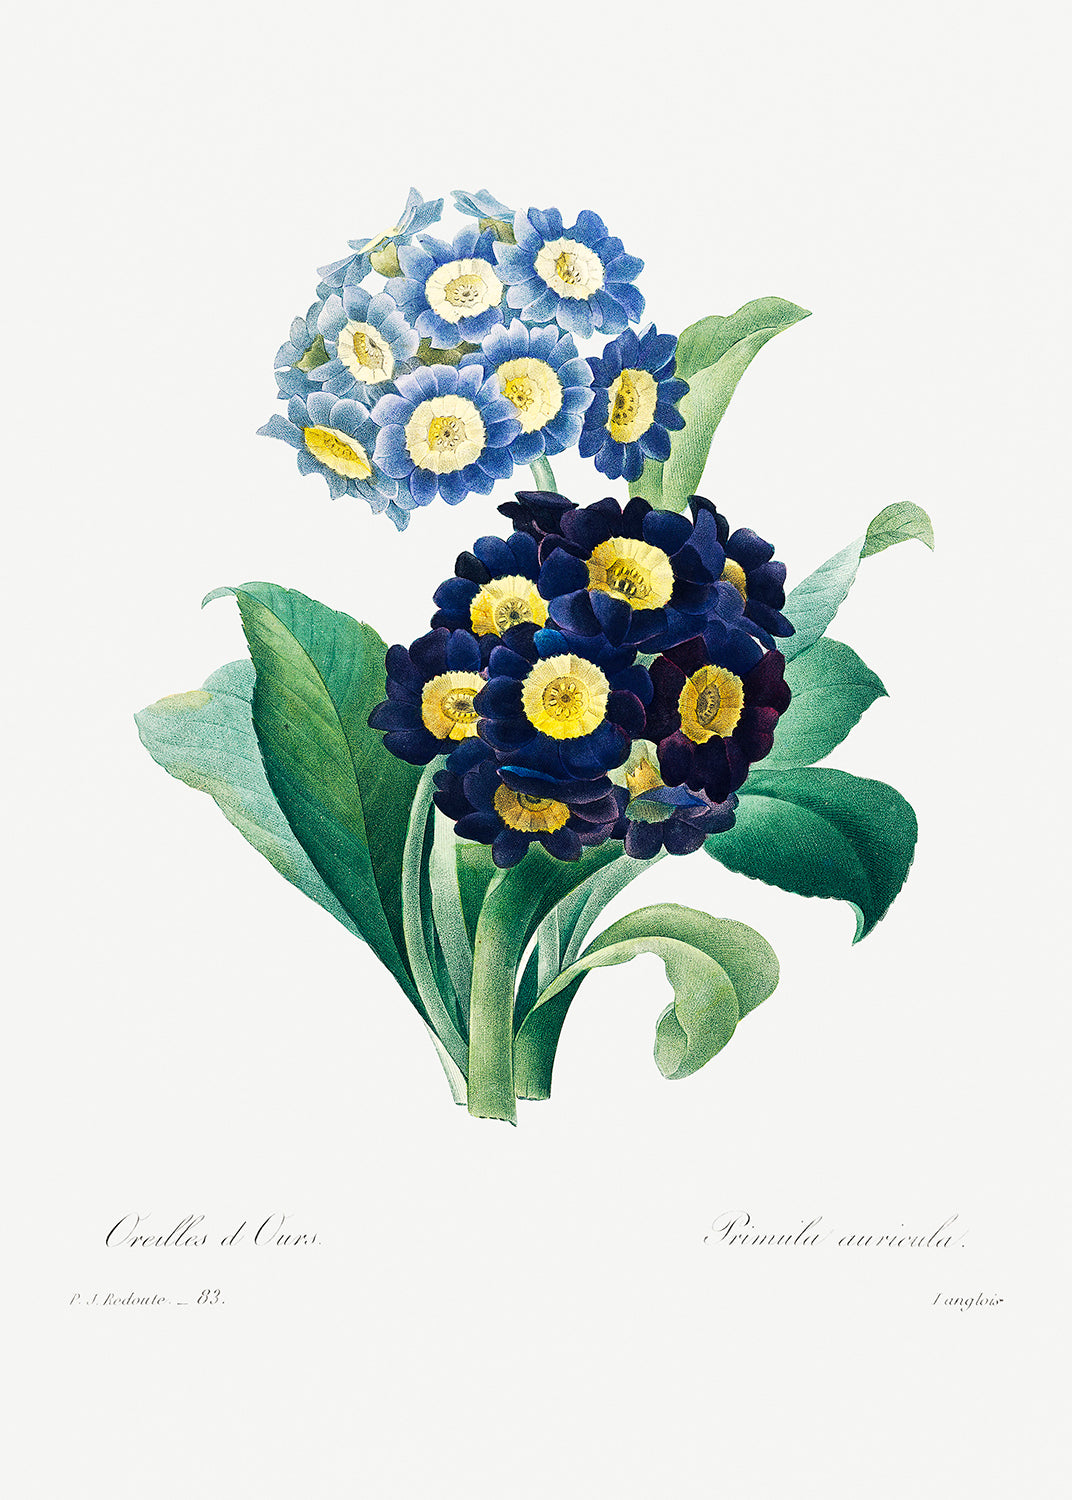 Botanical Plant Print - Cowslip primrose by Pierre Joseph Redoute